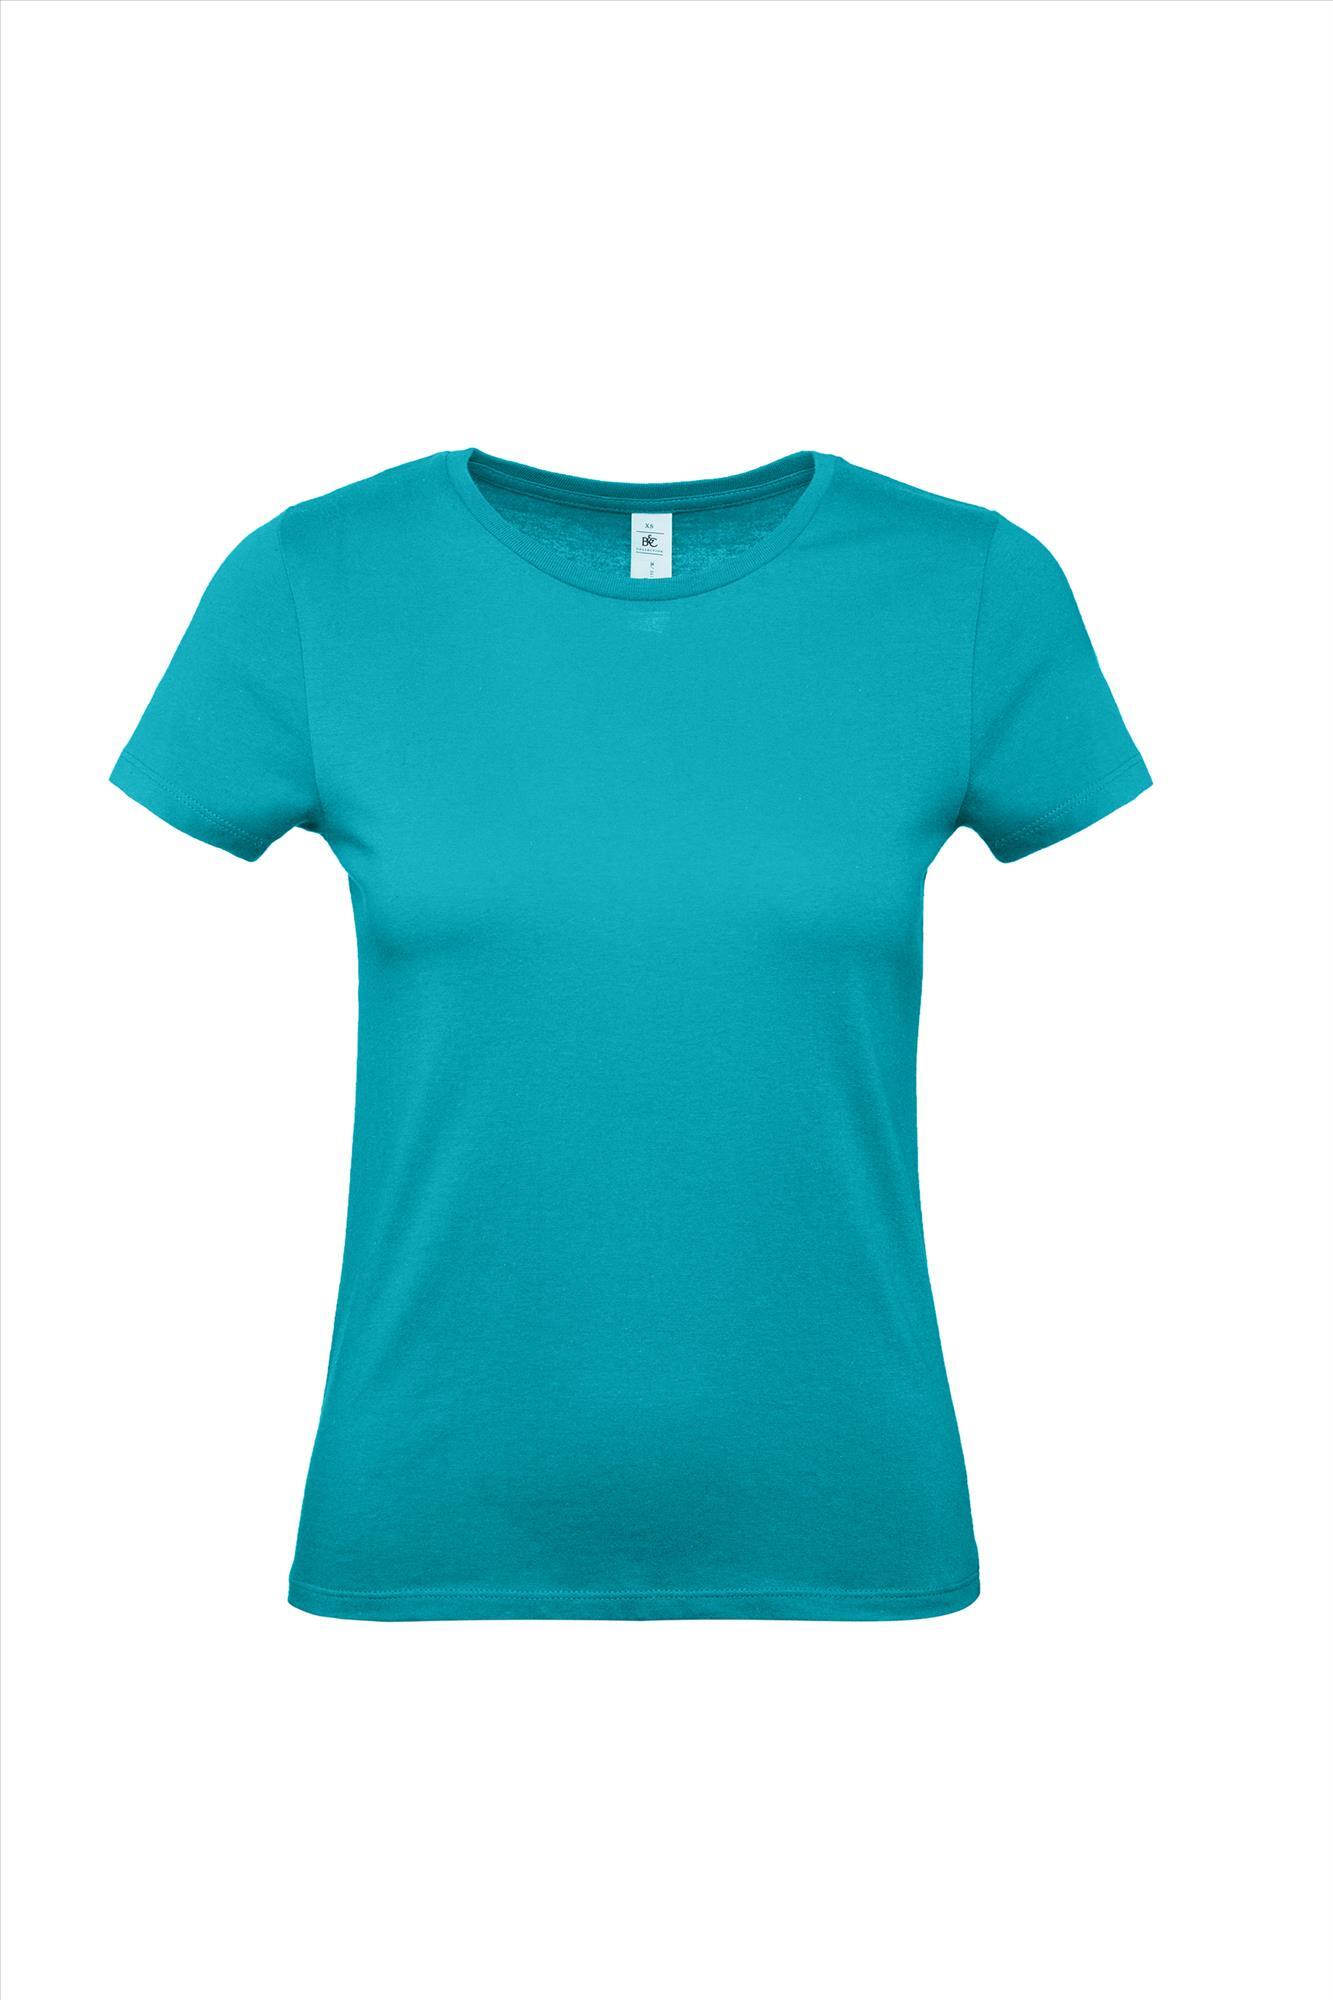 Modern T-shirt voor haar dames shirt real turquoise